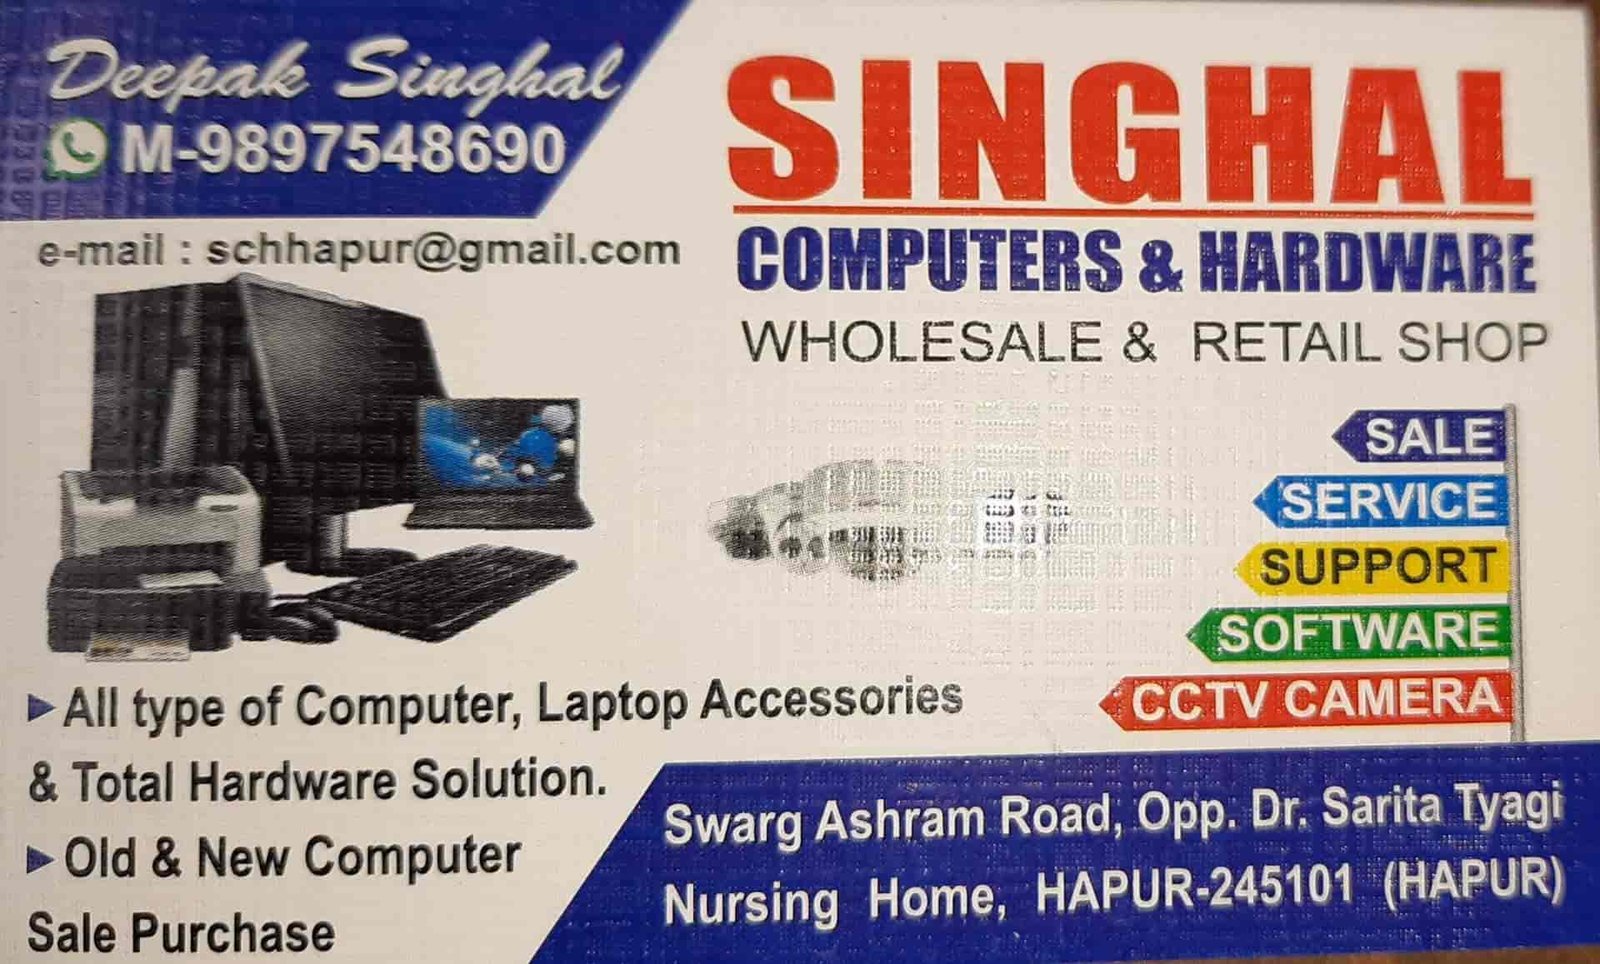 Singhal Computer & Hardware